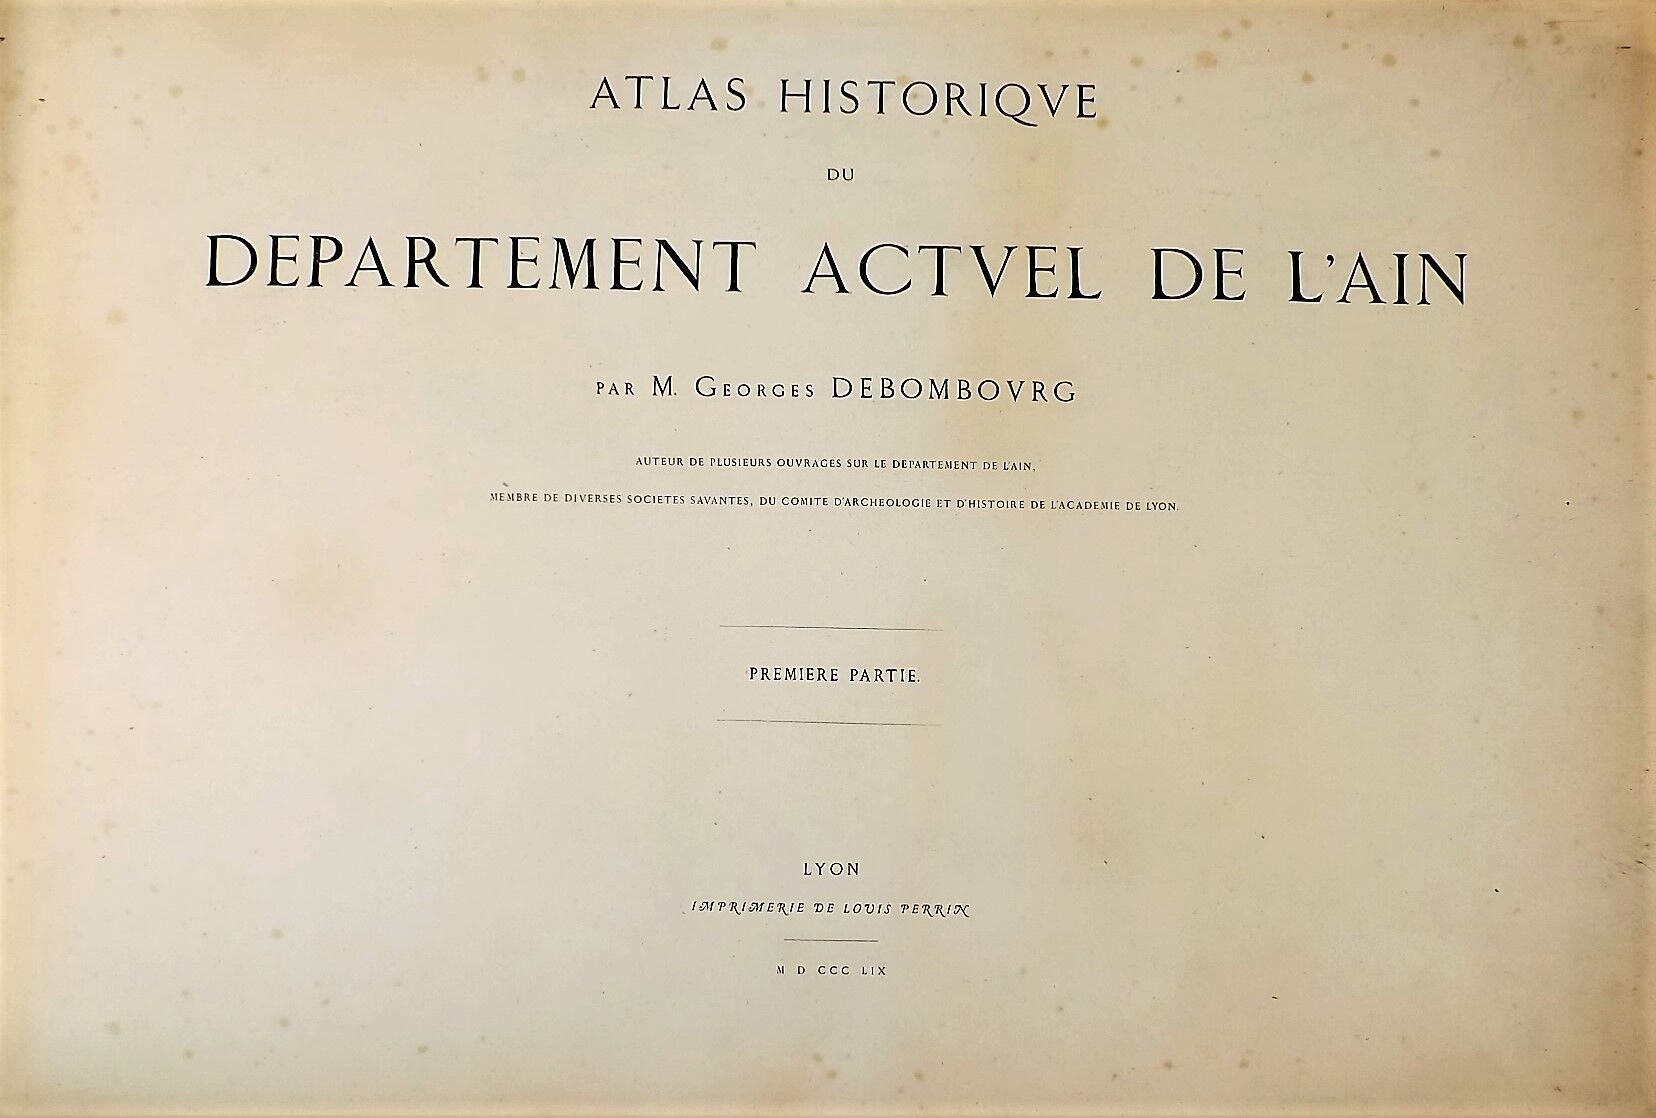 Null debombourg (g).艾因省的历史地图。1859年。2部分组成2卷，长方形对开，装订，布质书脊，印刷封面。
	分别印制了115份和500份。通&hellip;